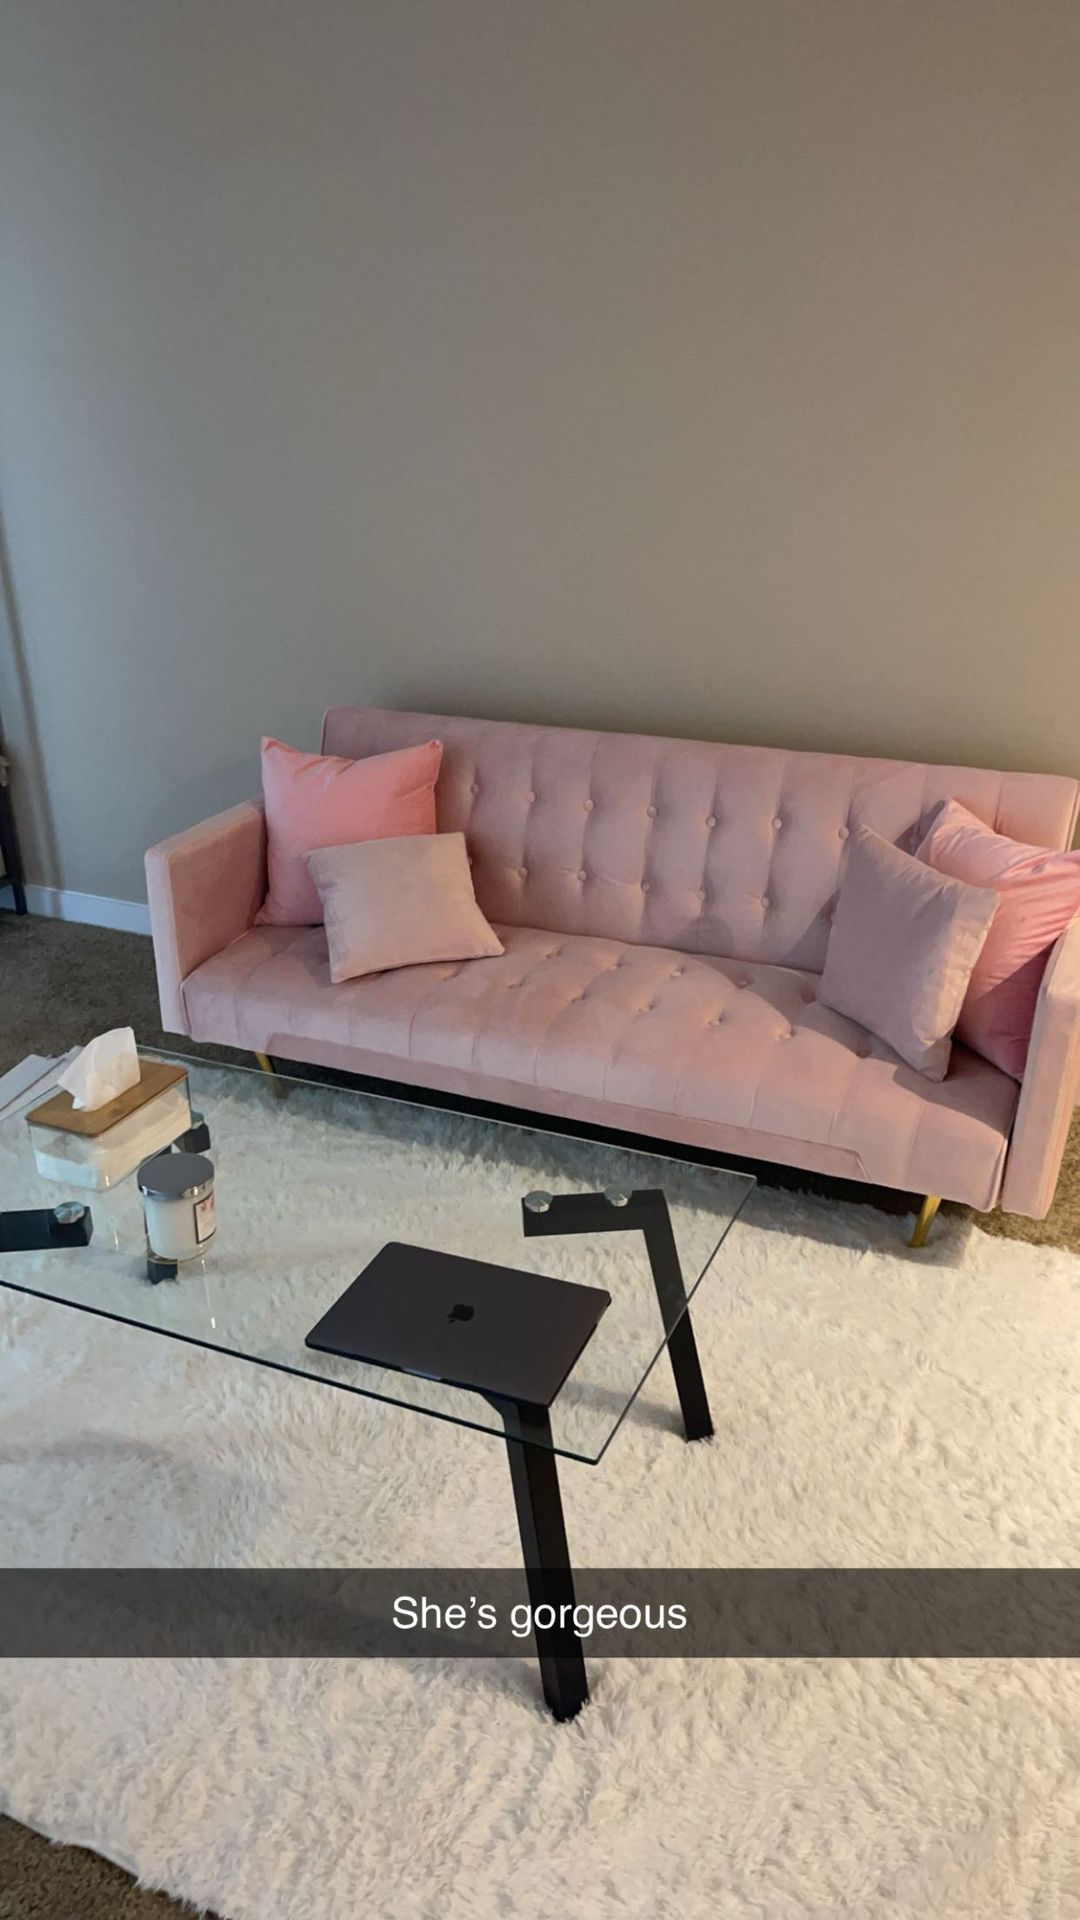 Pink Couch/Futon 